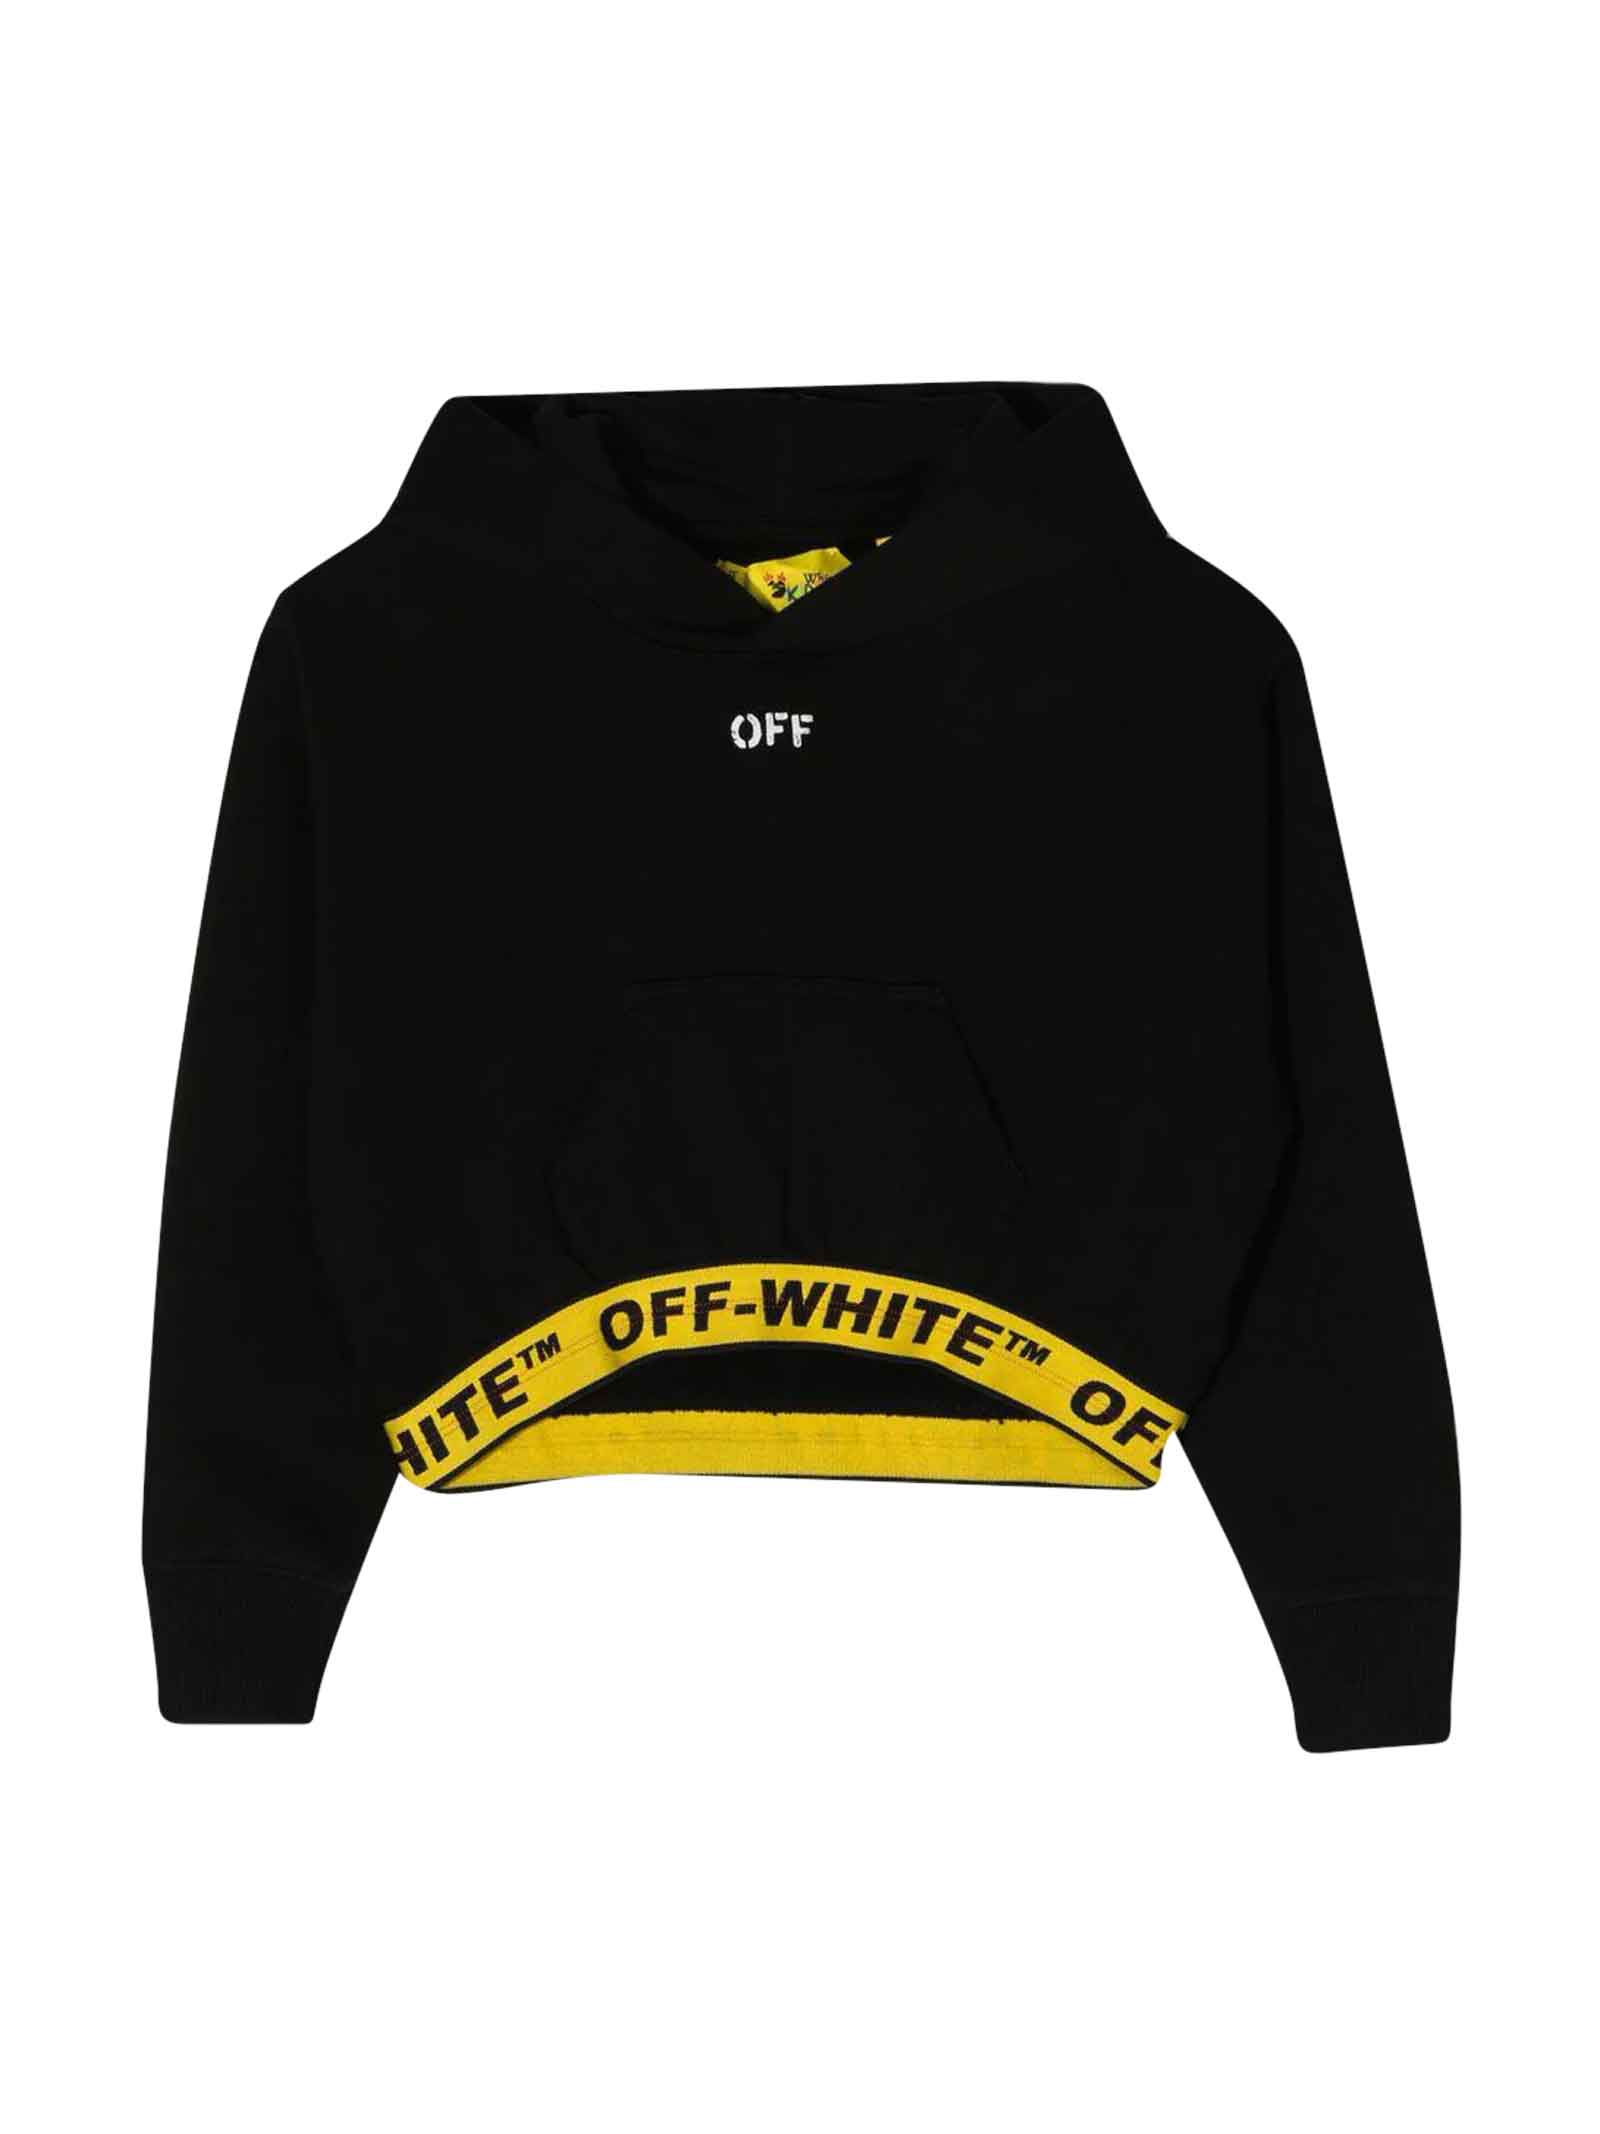 Off-White Black Sweatshirt Girl